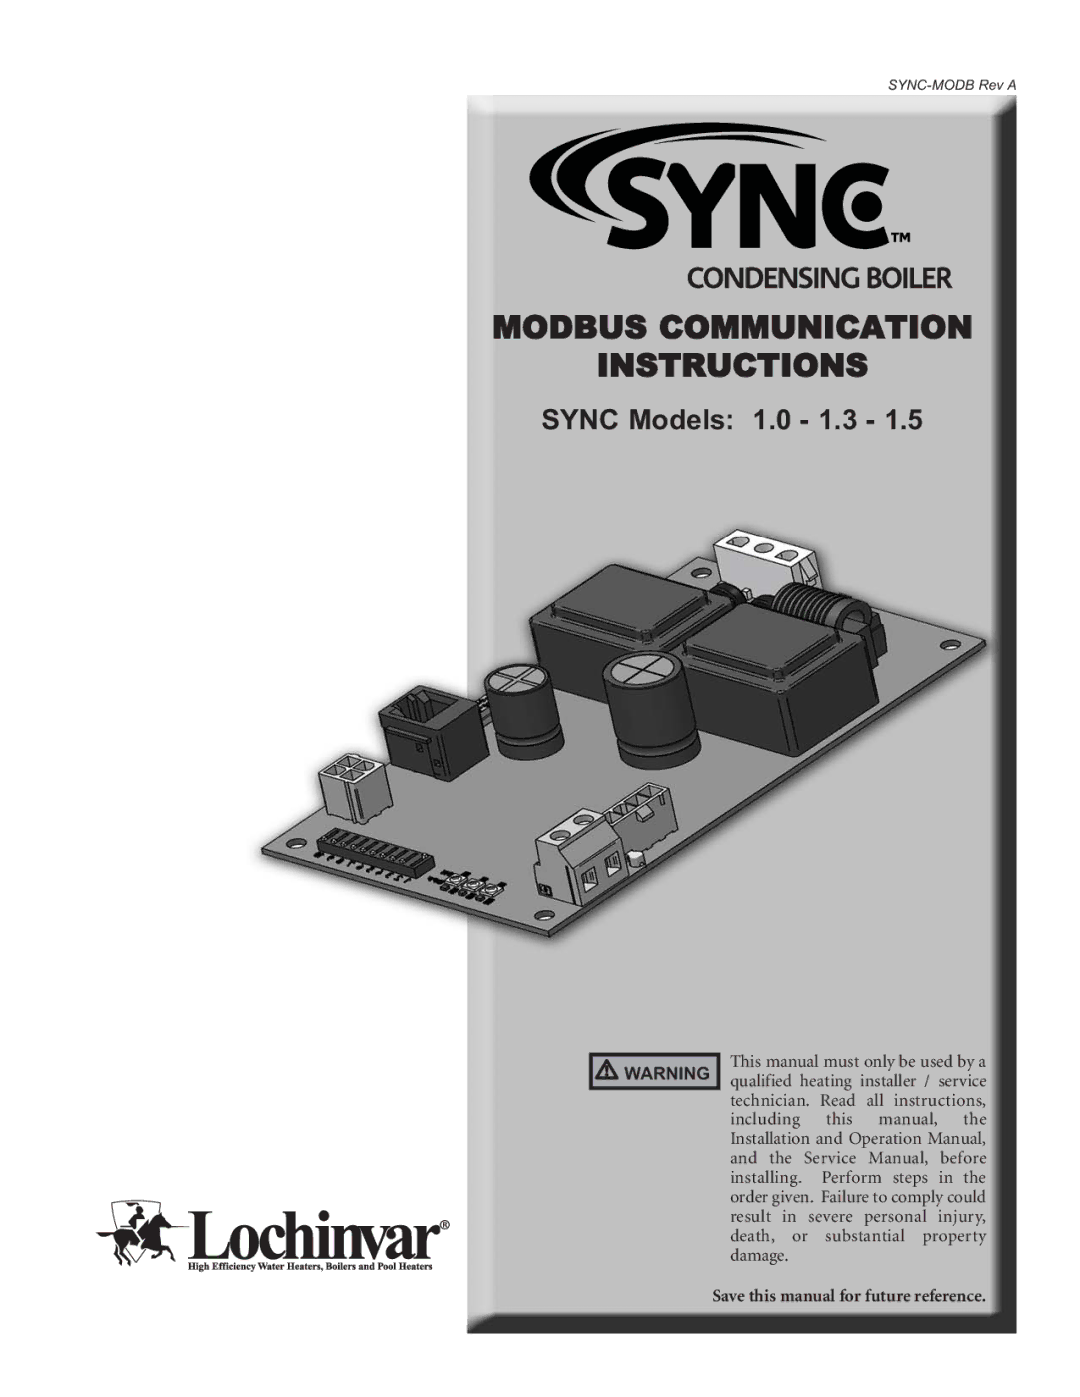 Lochinvar 1.0- 1.3- 1.5 operation manual Modbus Communication Instructions, Sync Models 1.0 1.3 